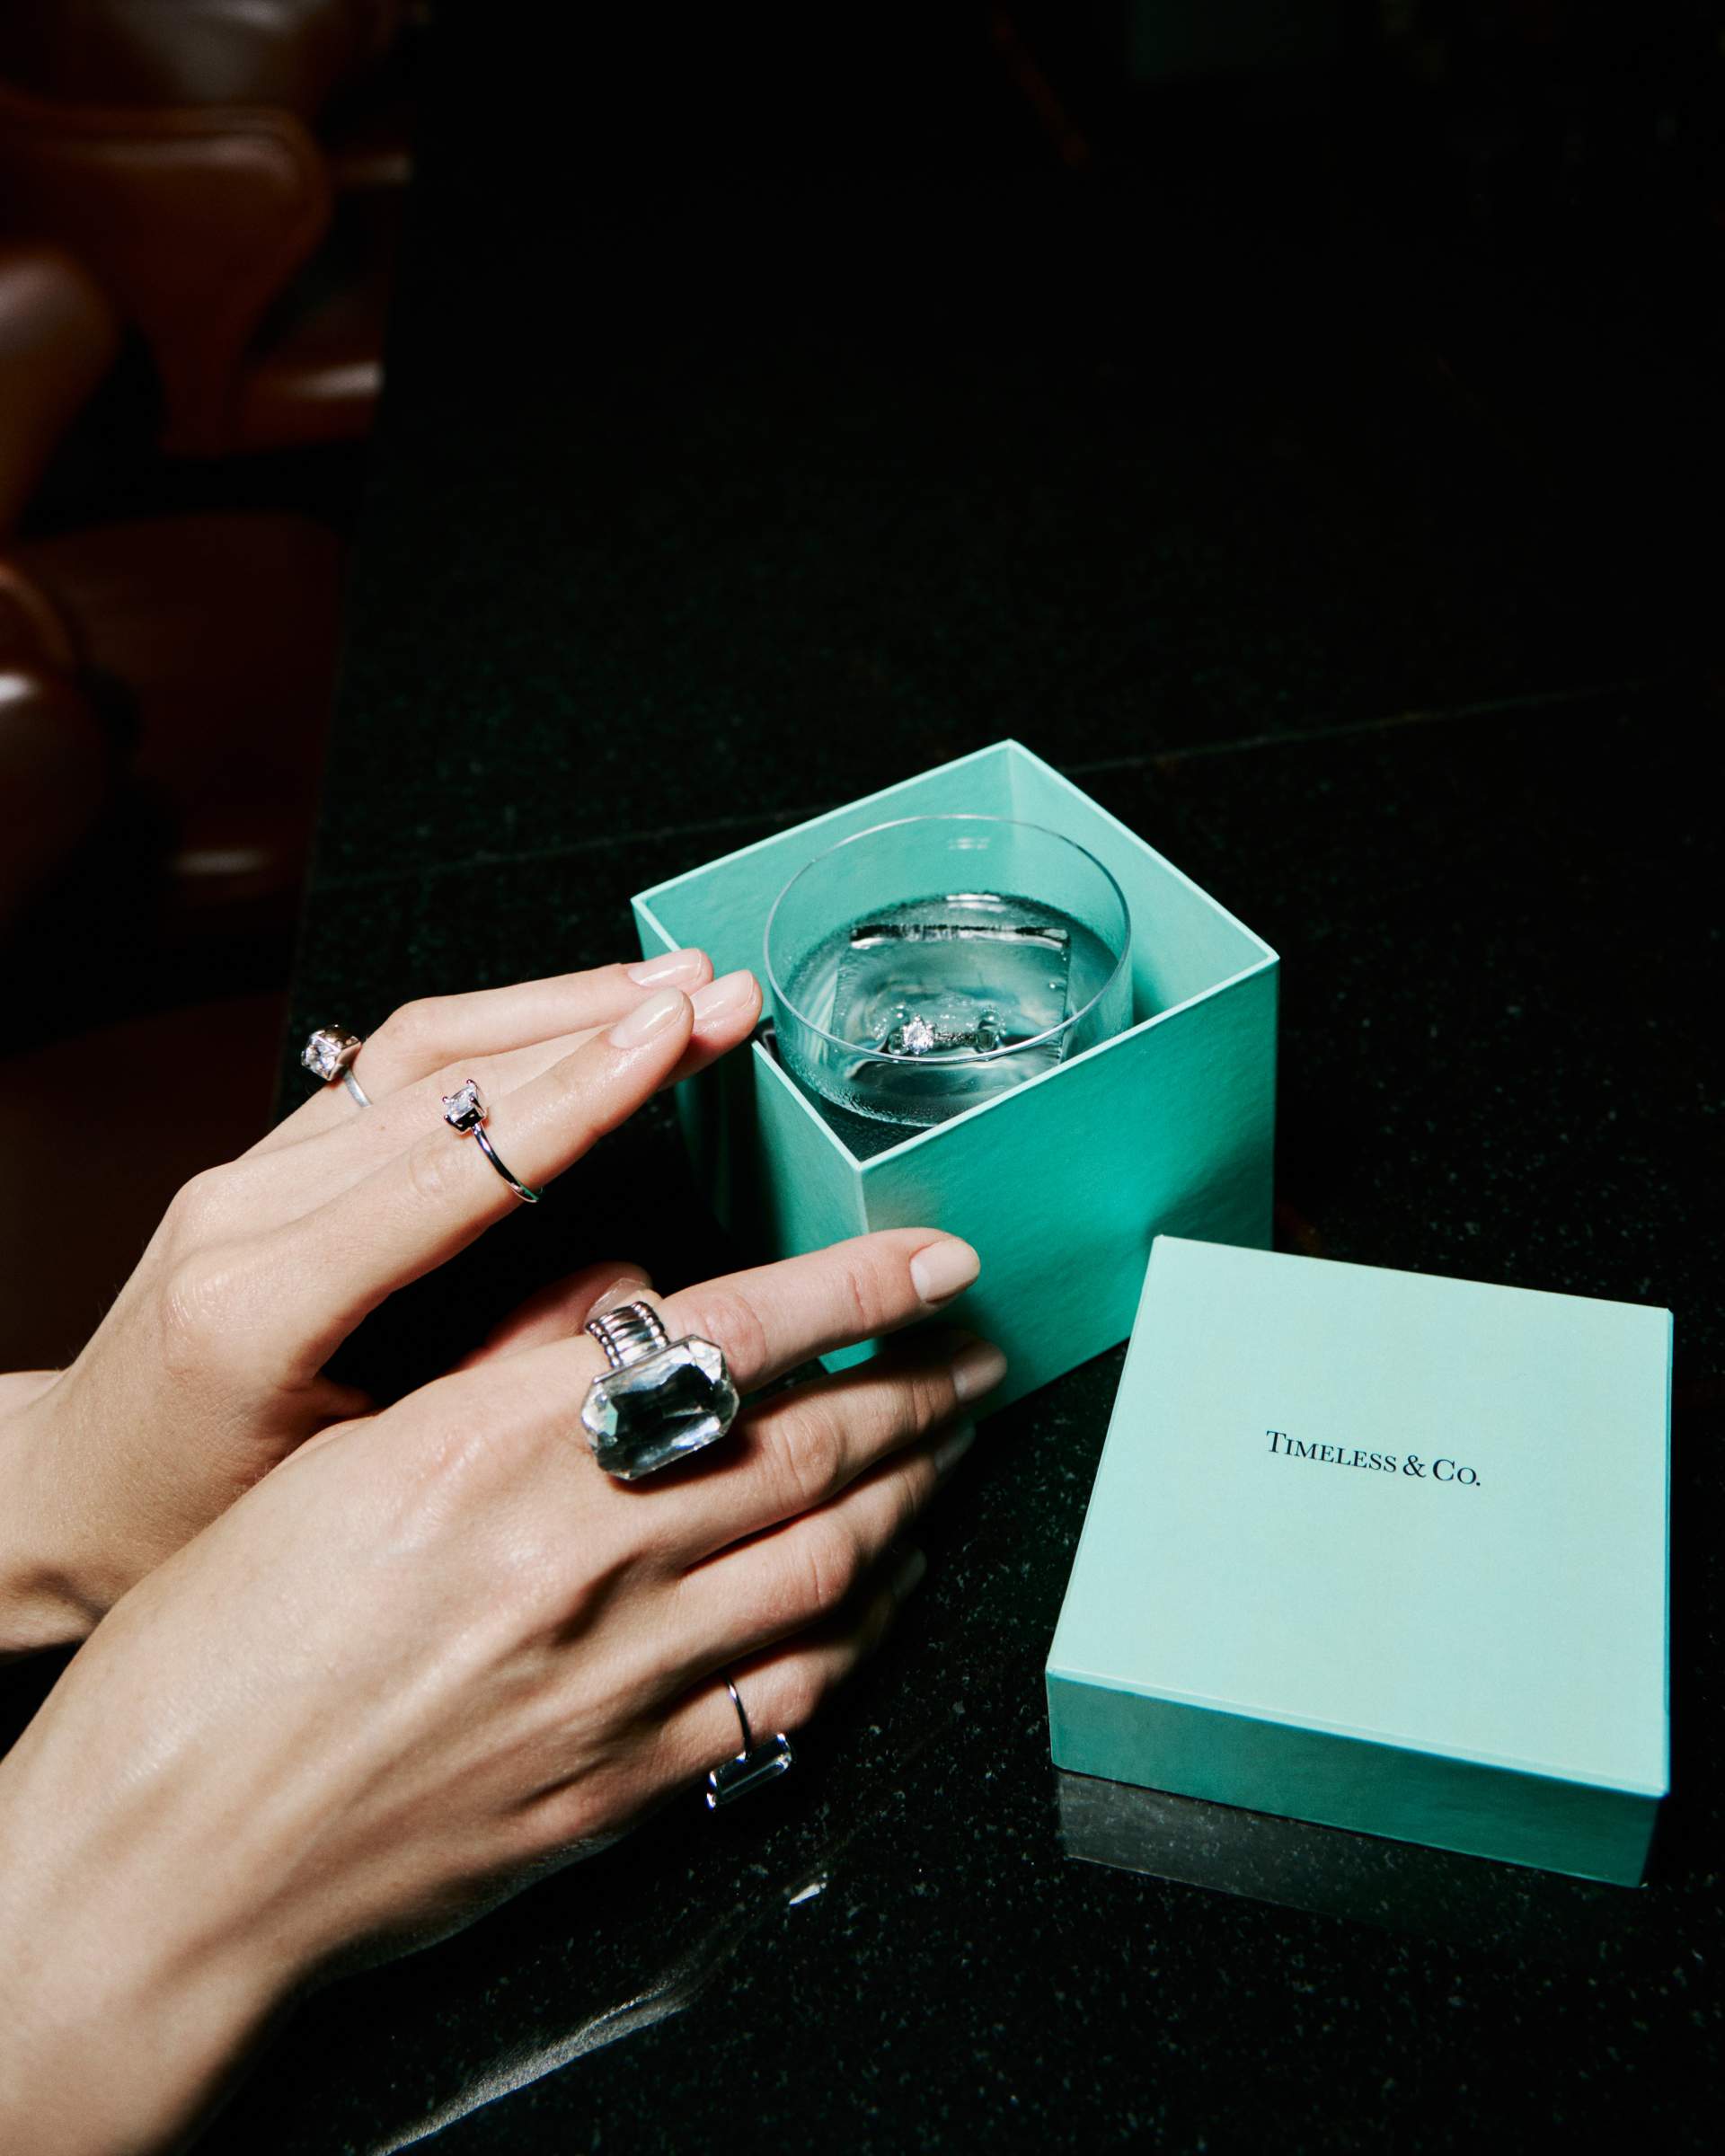 TIMELESS дарит кольцо Tiffany & Co.